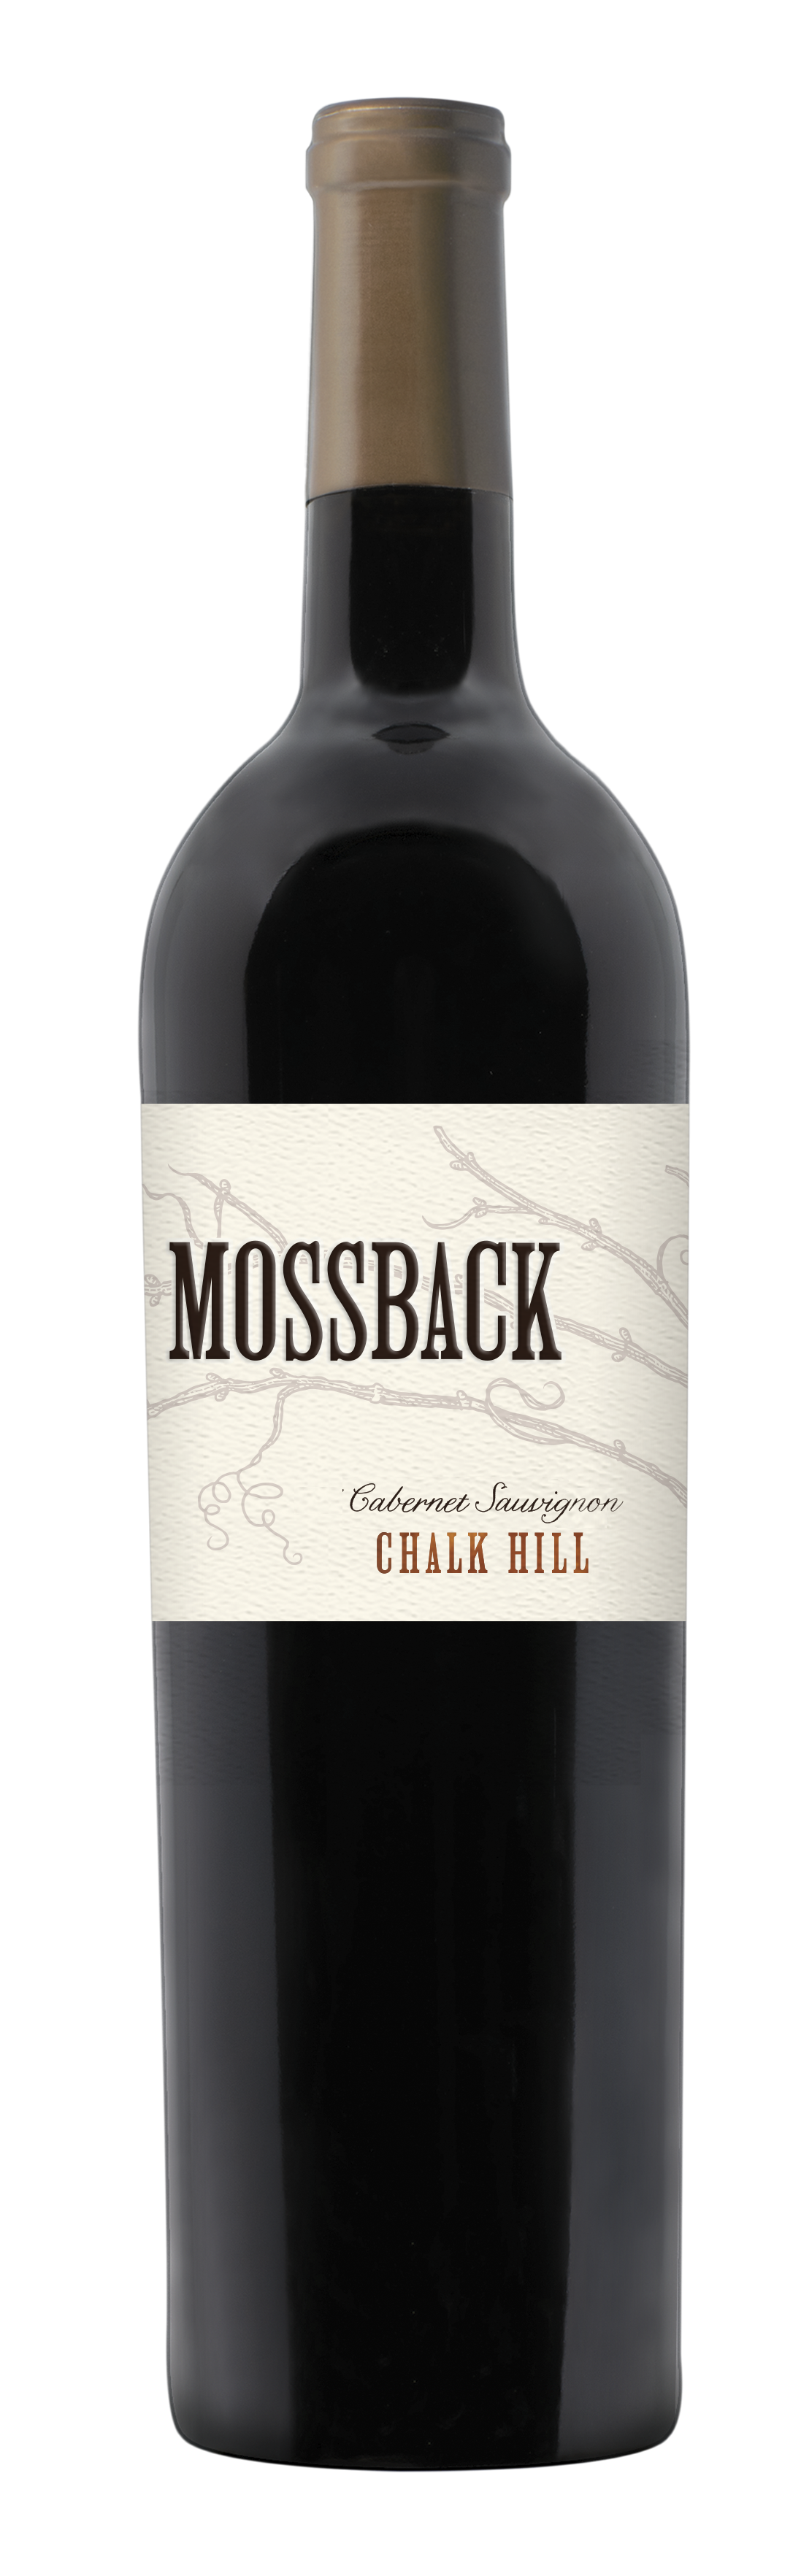 Product Image for 2018 Mossback Chalk Hill Cabernet Sauvignon